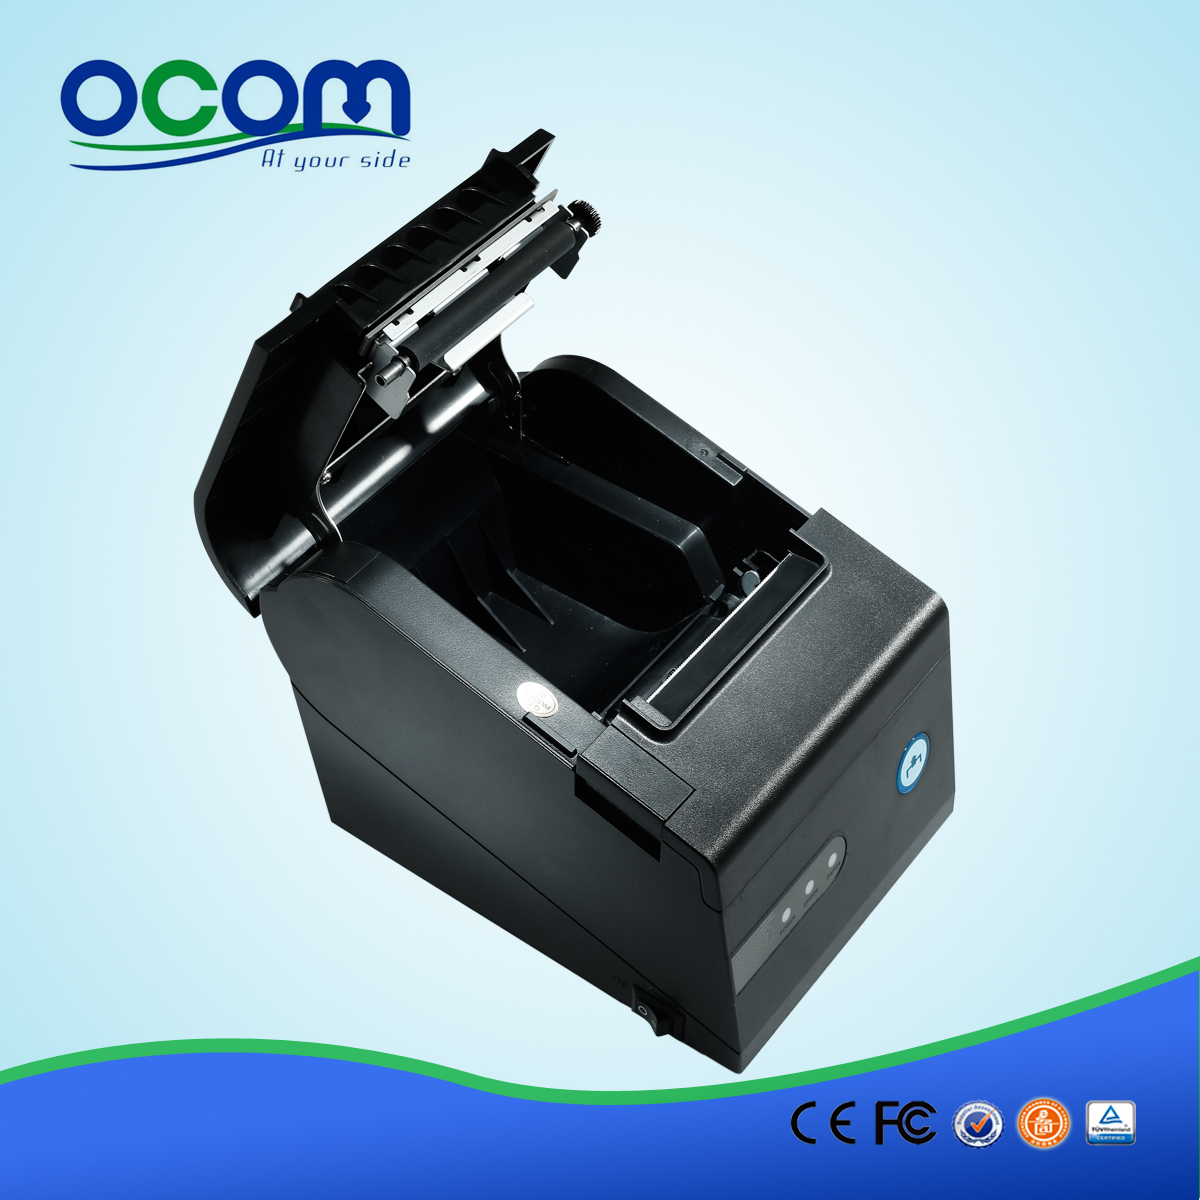 80mm fabricante de la máquina POS Impresión de facturación Impresora Térmica de Recibo